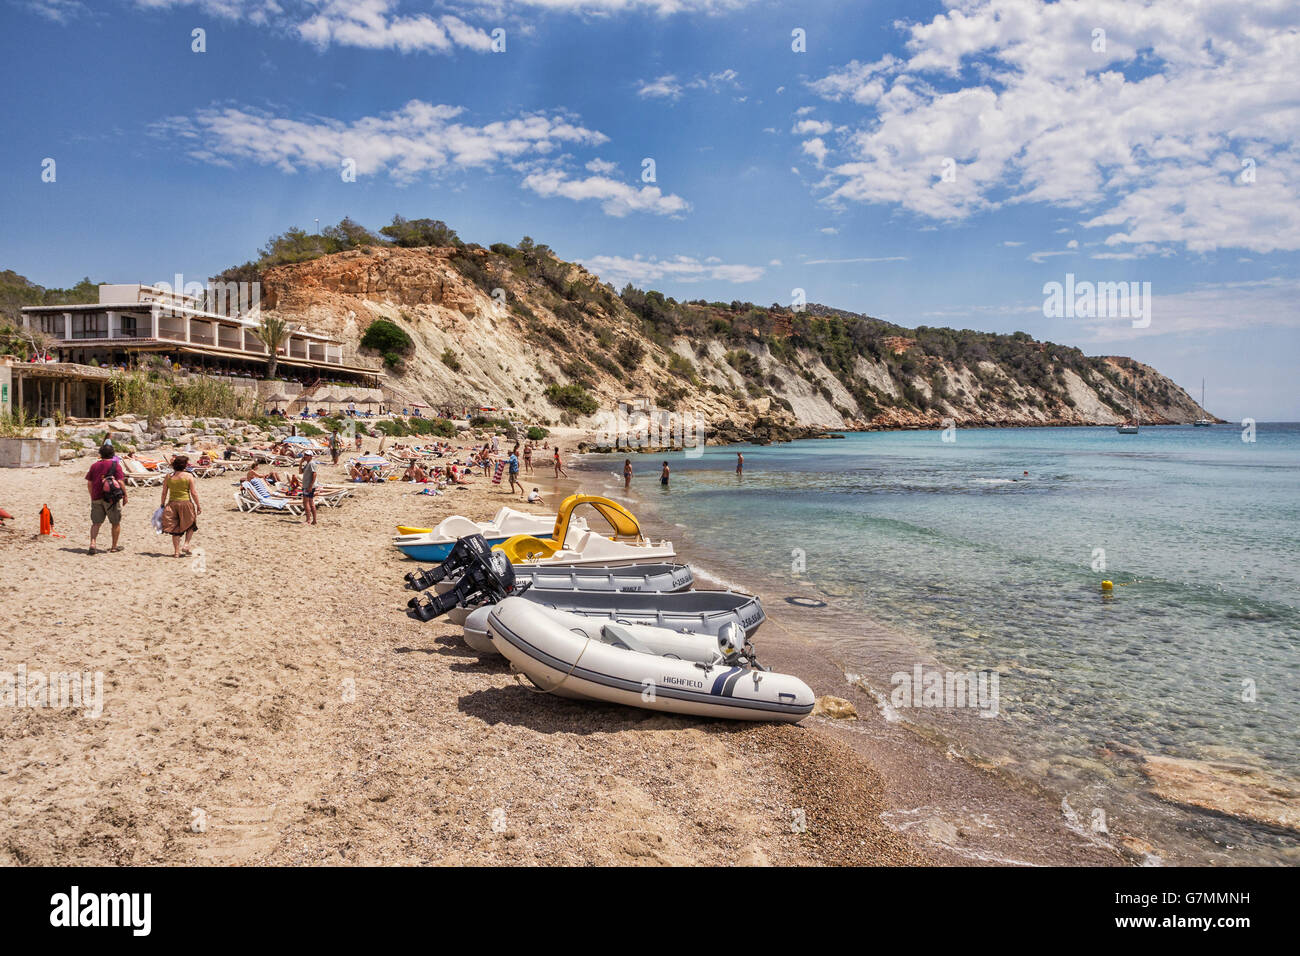 The beach at Cala d'Hort, Ibiza, Spain. Stock Photo